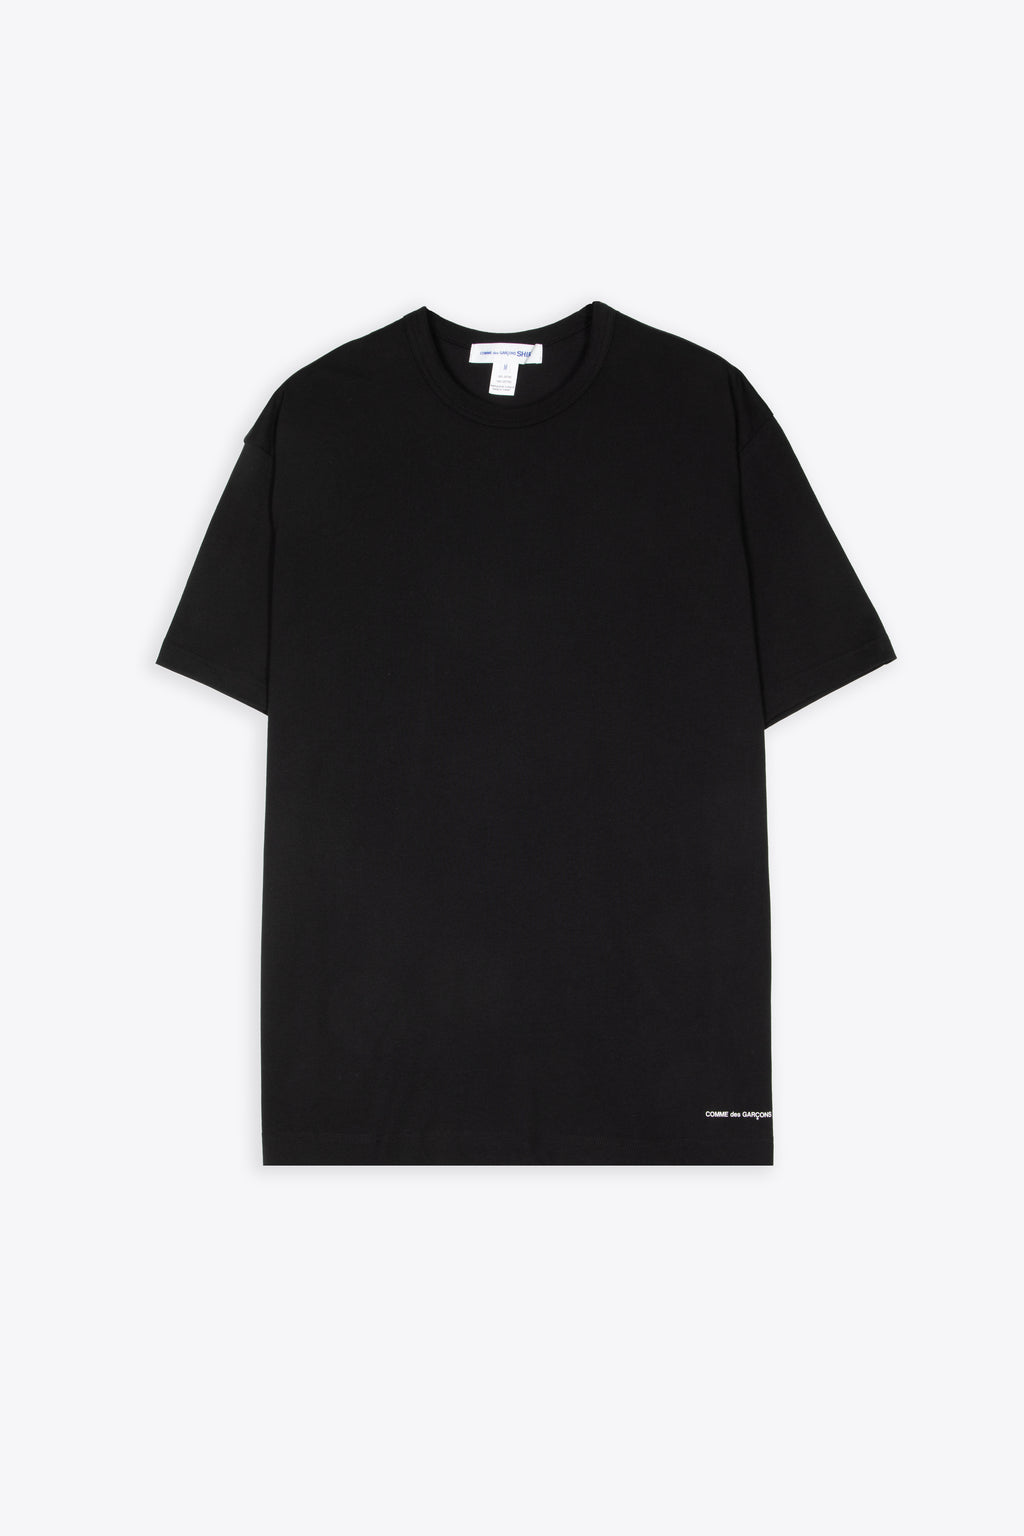 alt-image__Black-cotton-oversize-t-shirt-with-logo